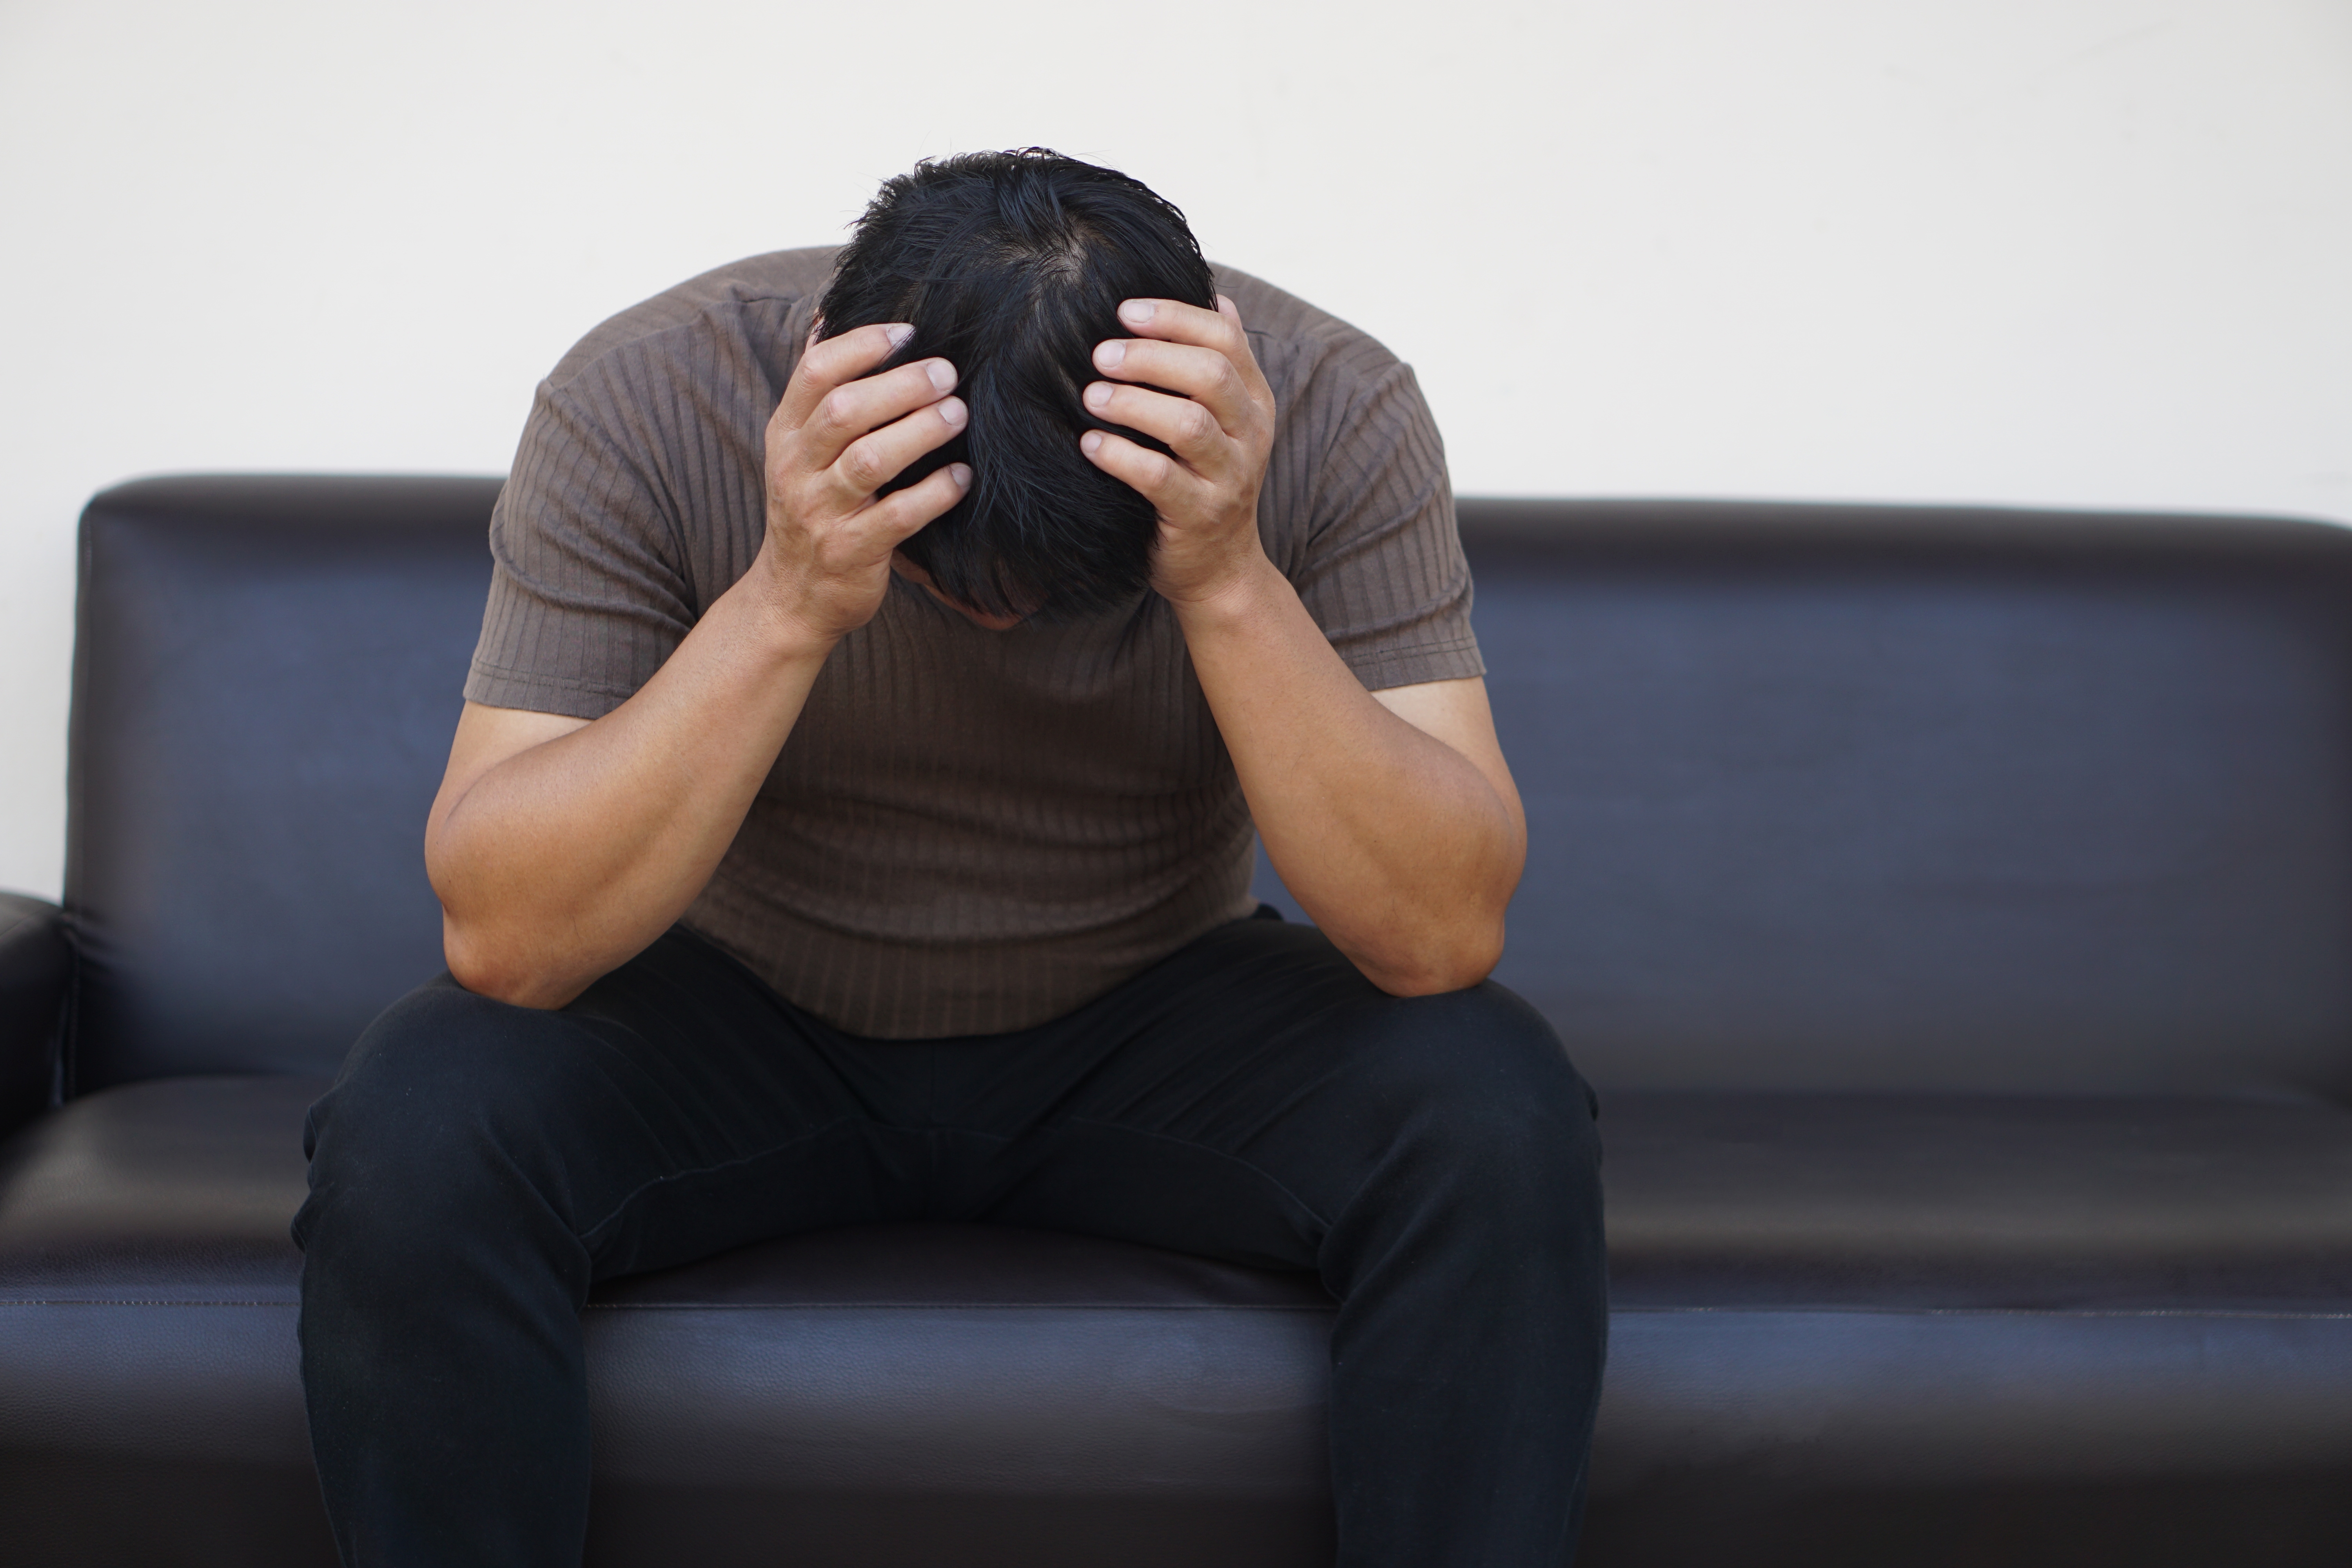 A depressed man | Source: Shutterstock